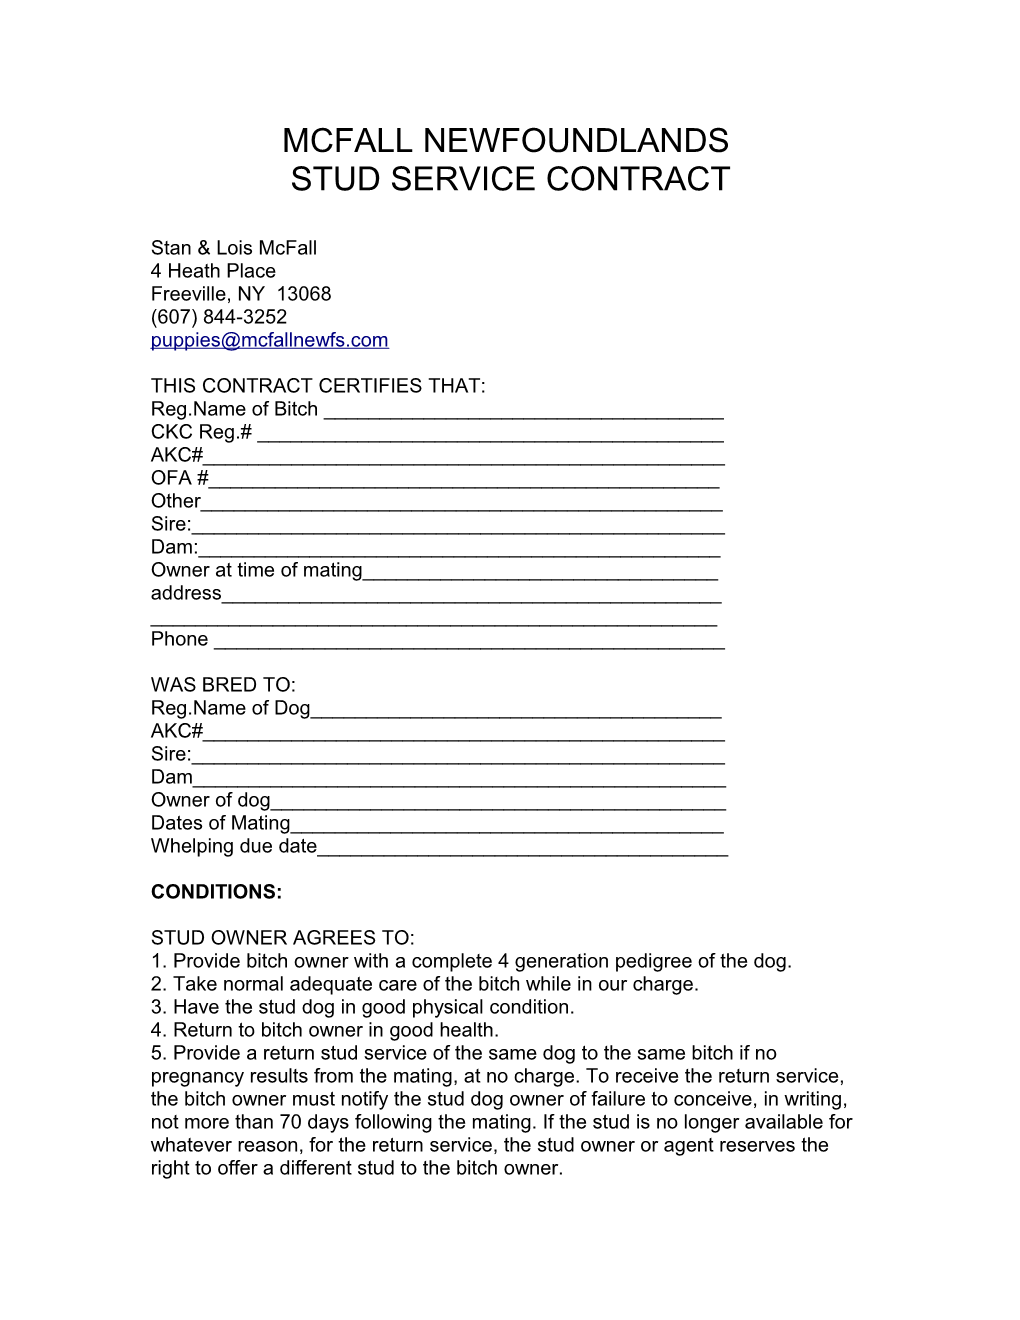 Mcfall Newfoundlands Stud Service Contract